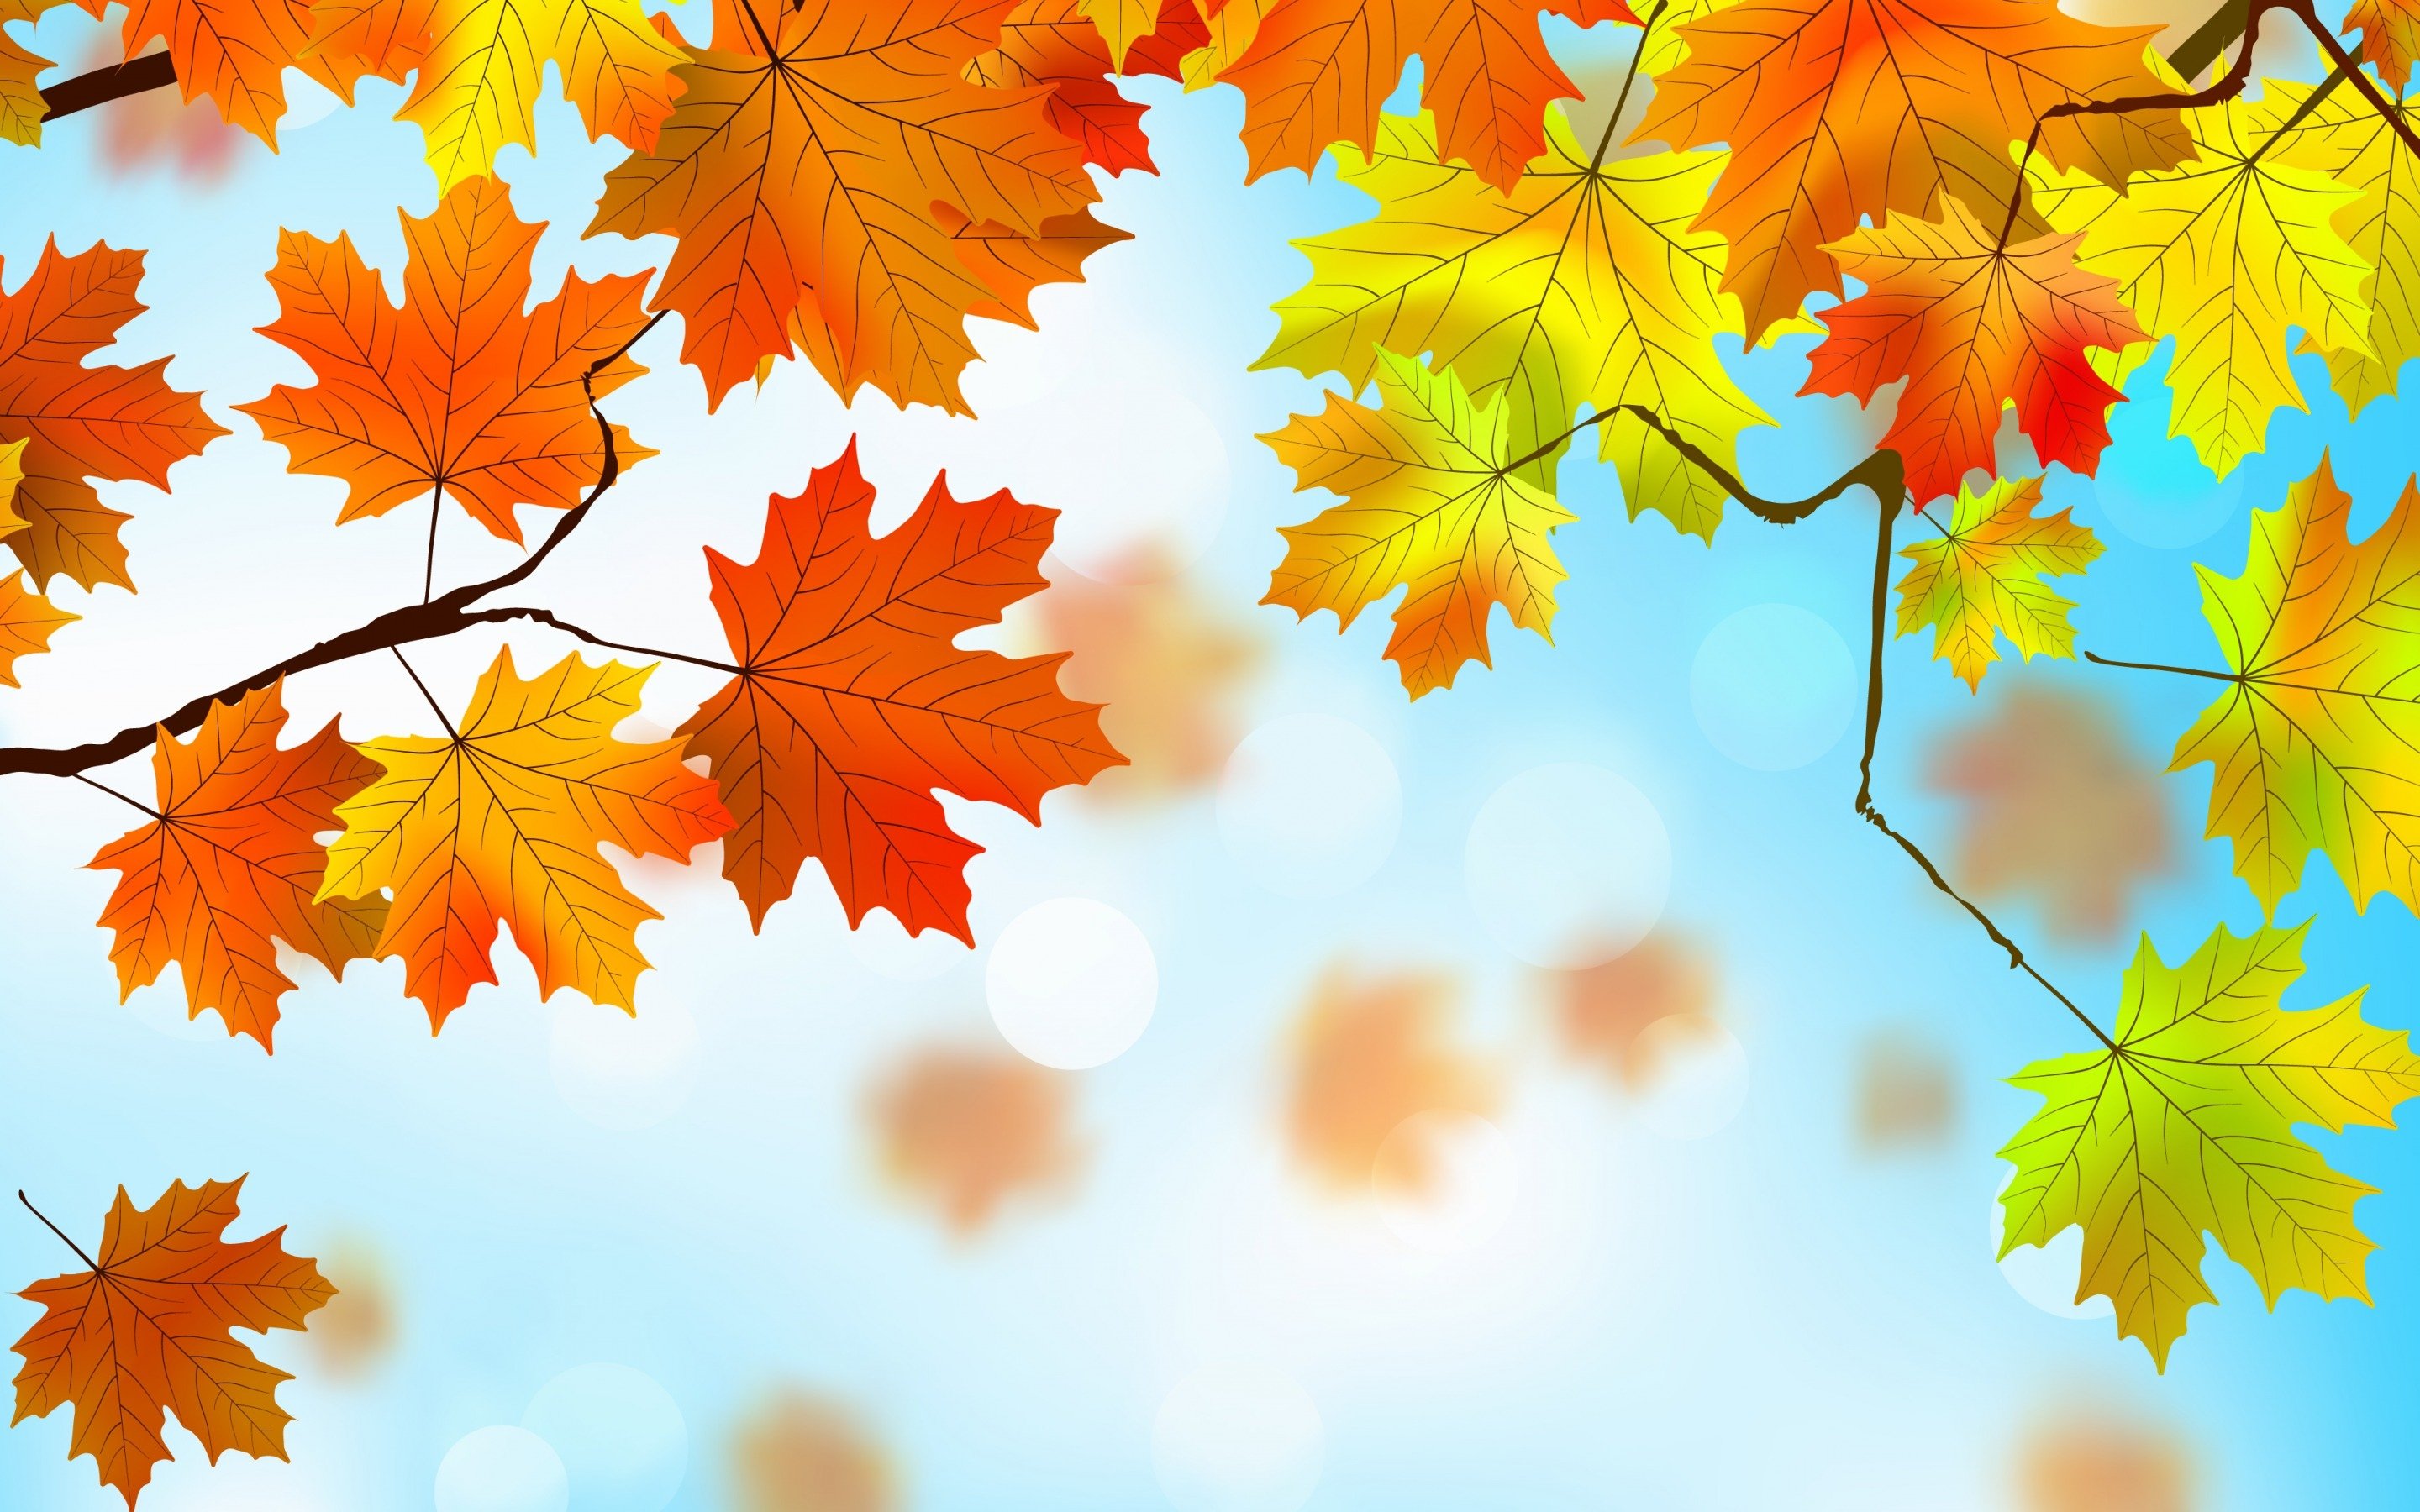 textures-autumn-leaves